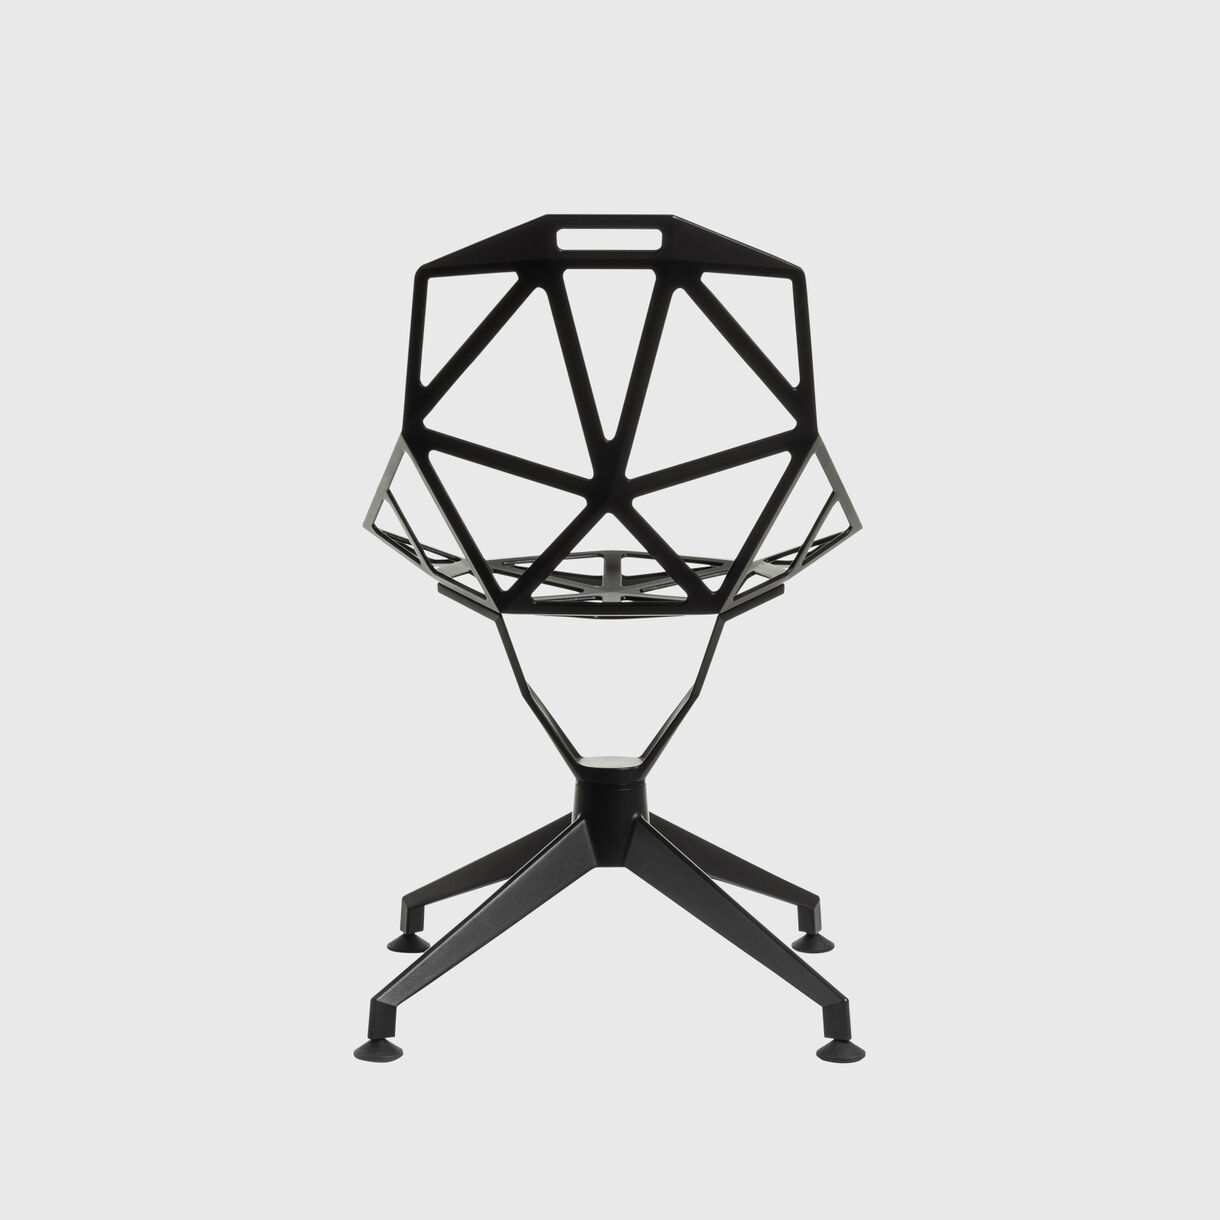 Chair_One 4 Star, Black